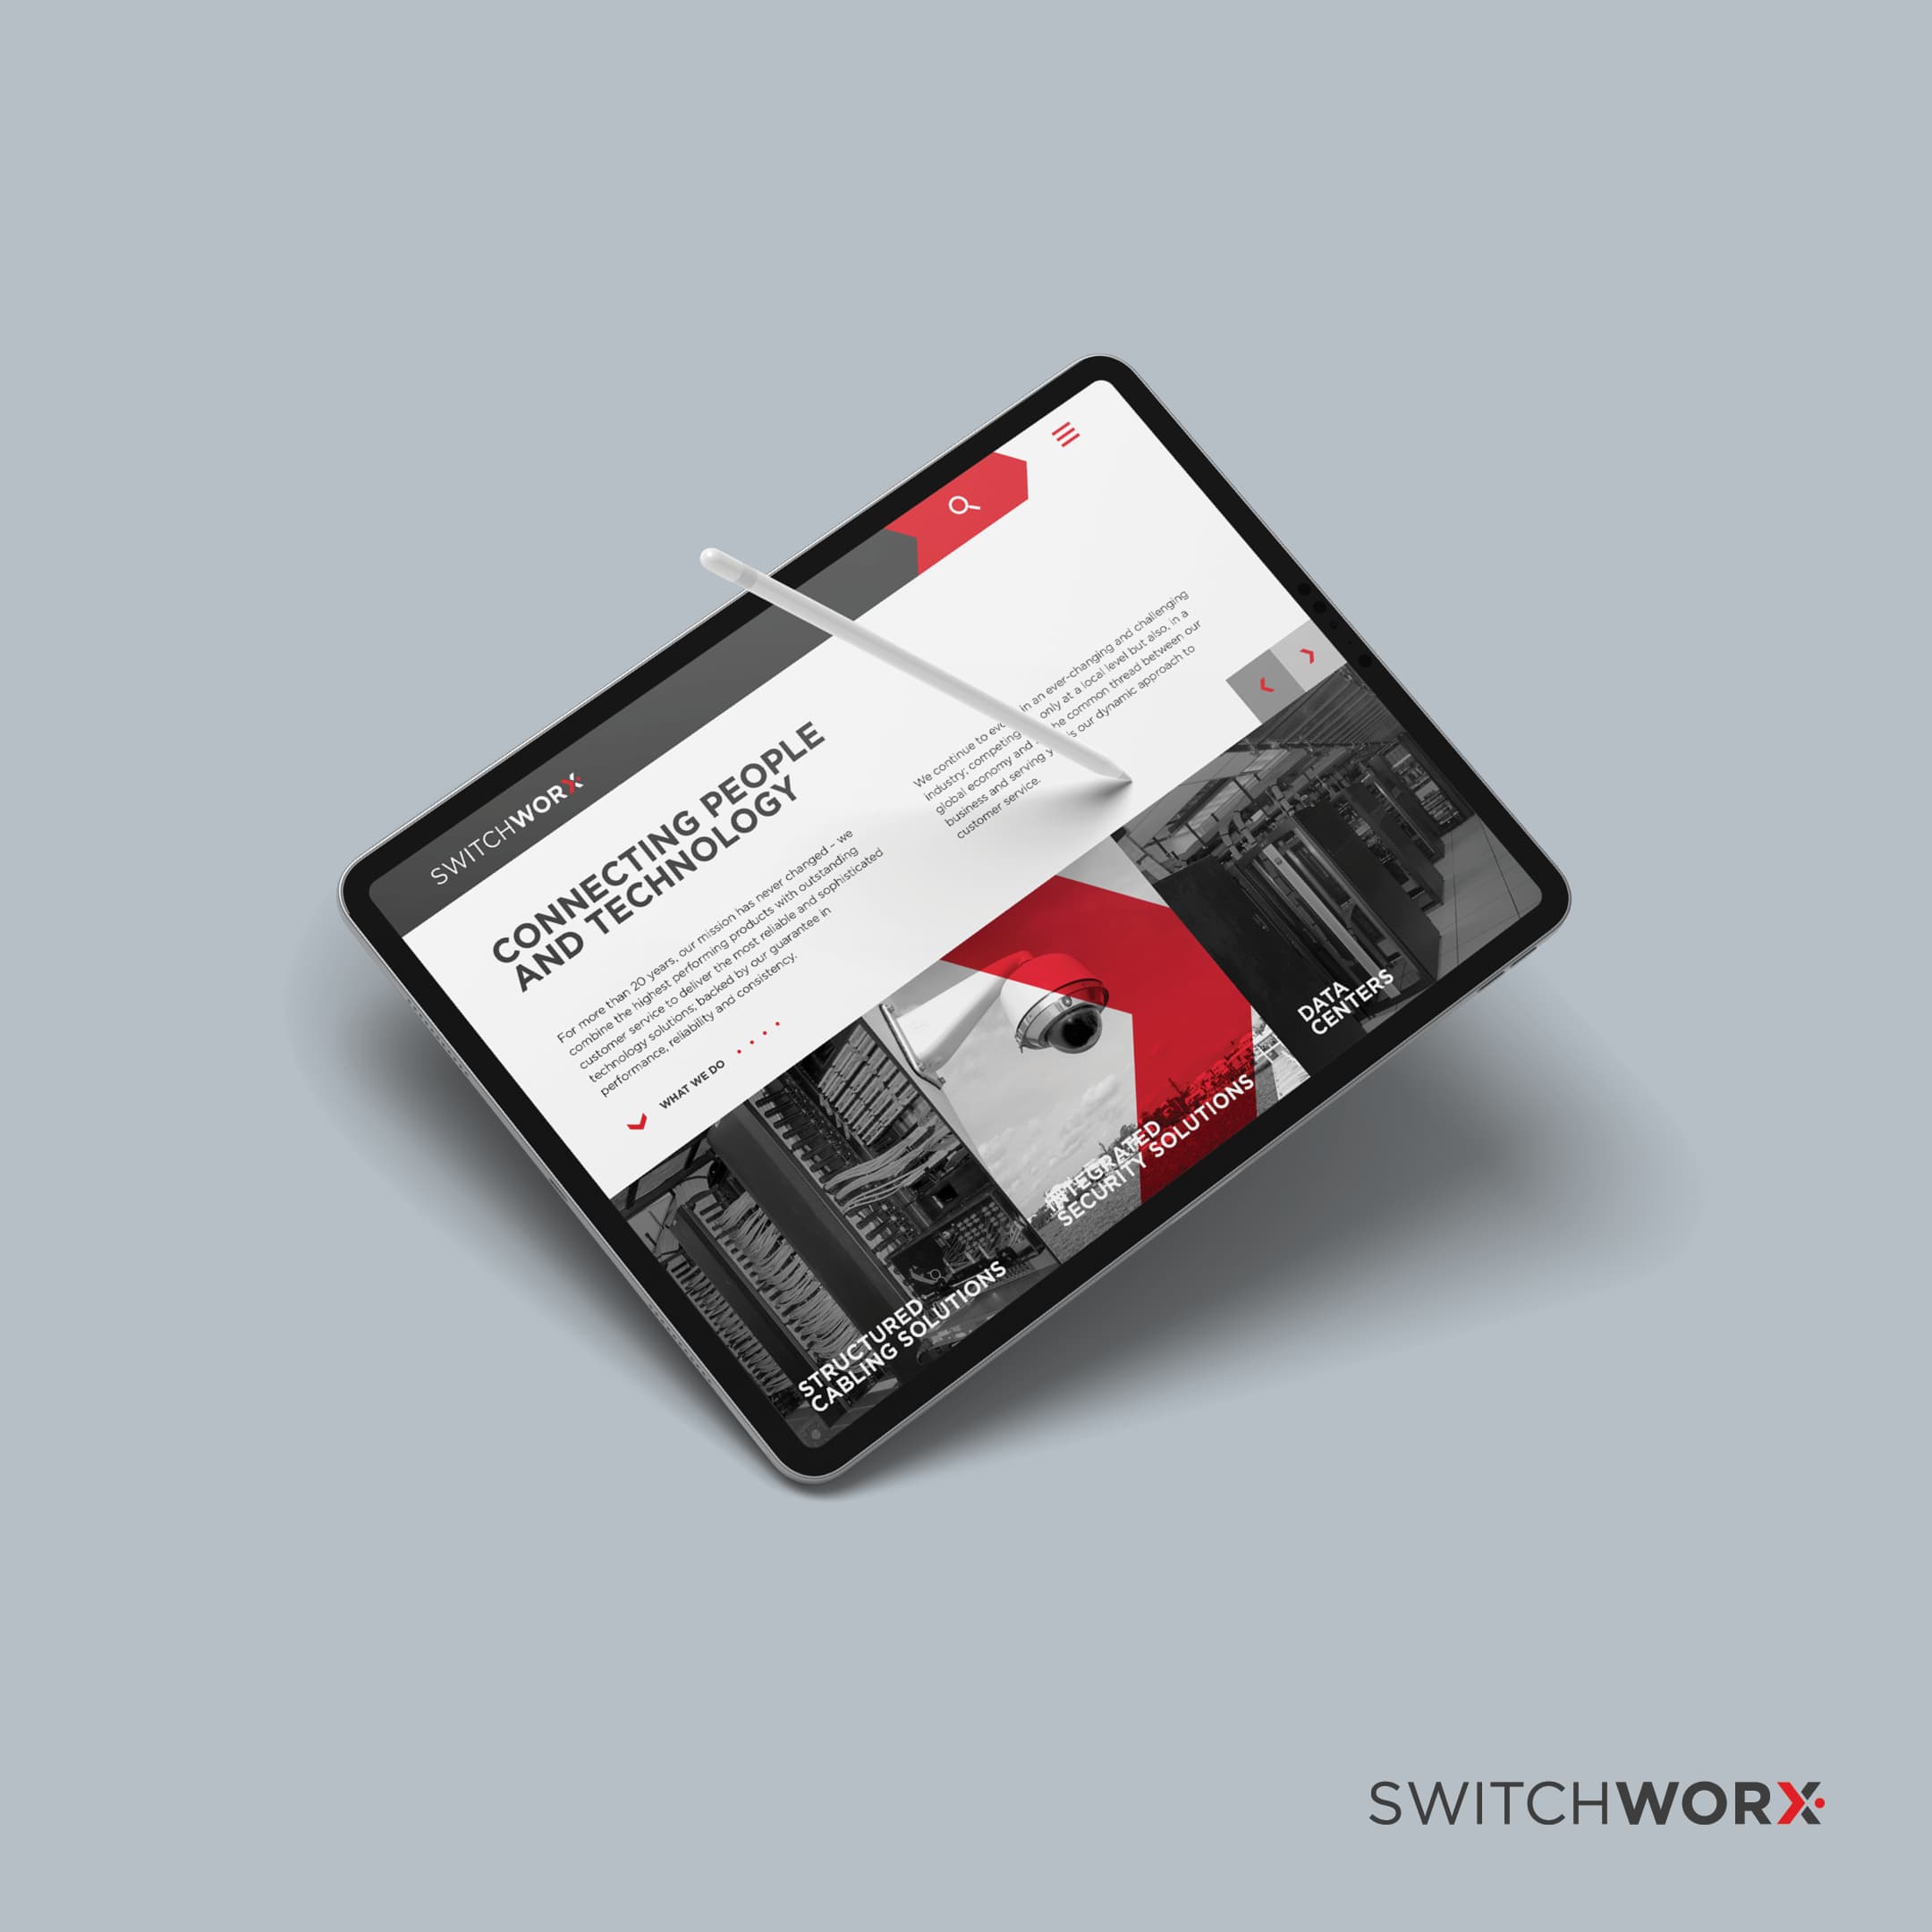 Switchworx Website